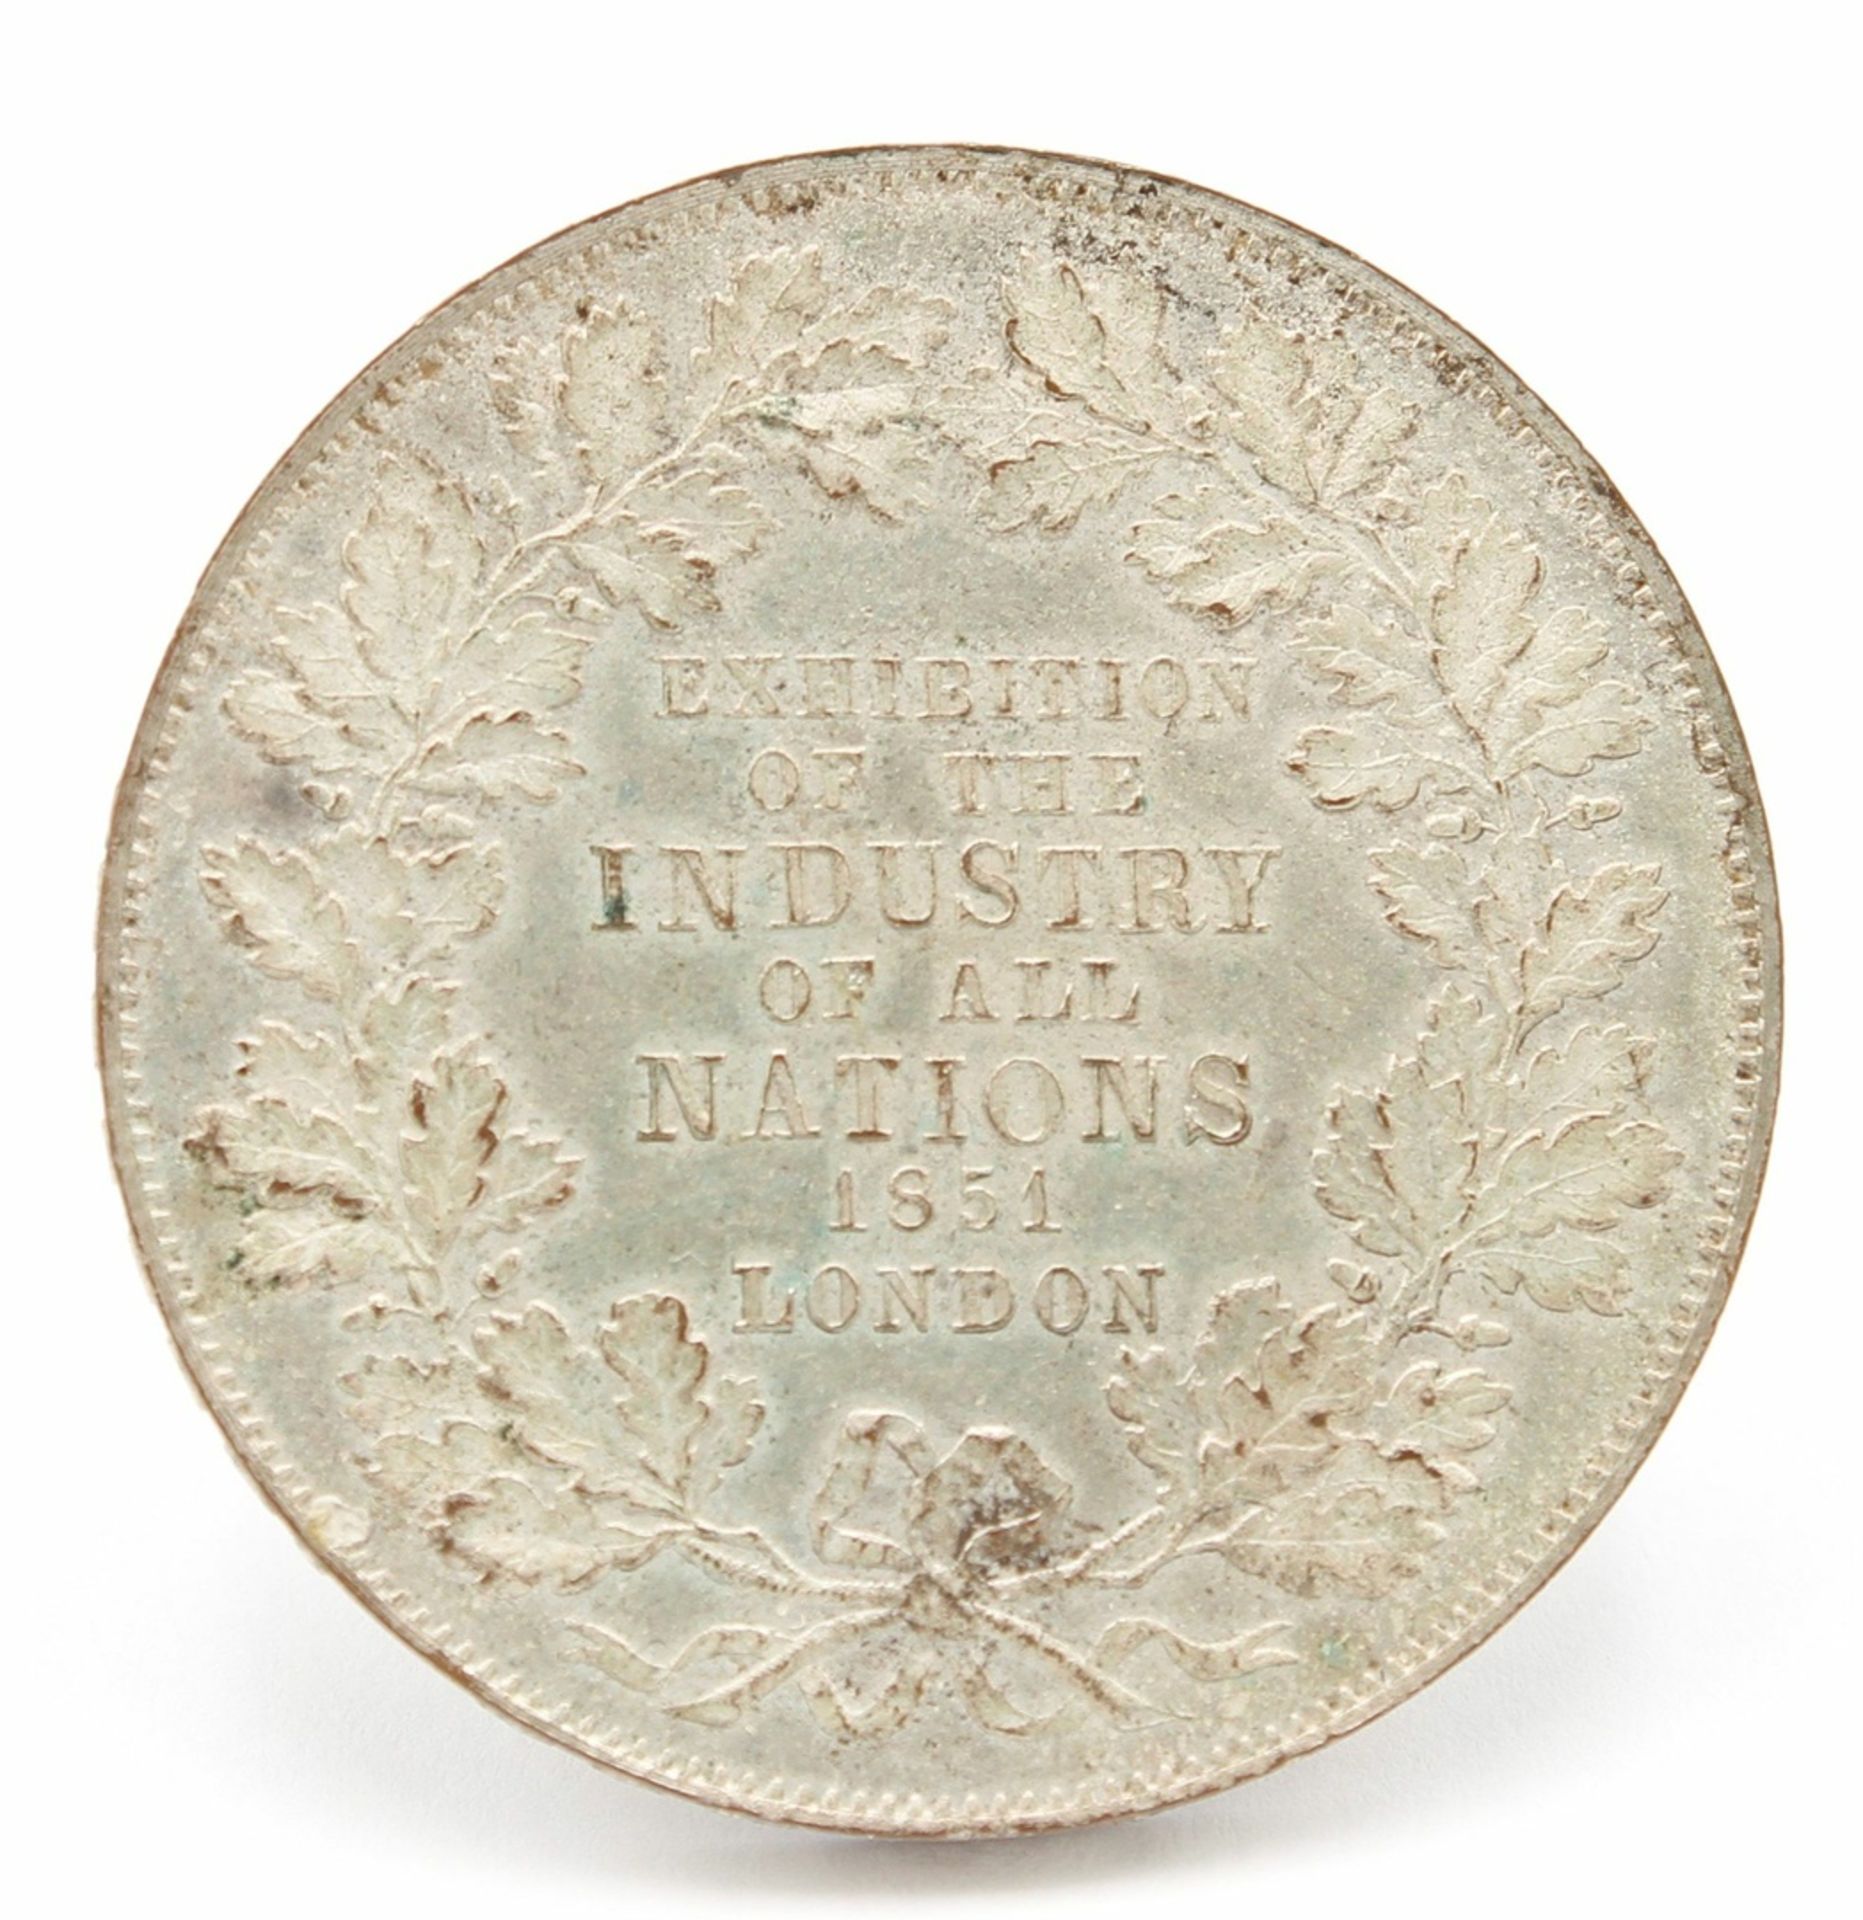 Medaille zur "Great Exhibition" in London 1851